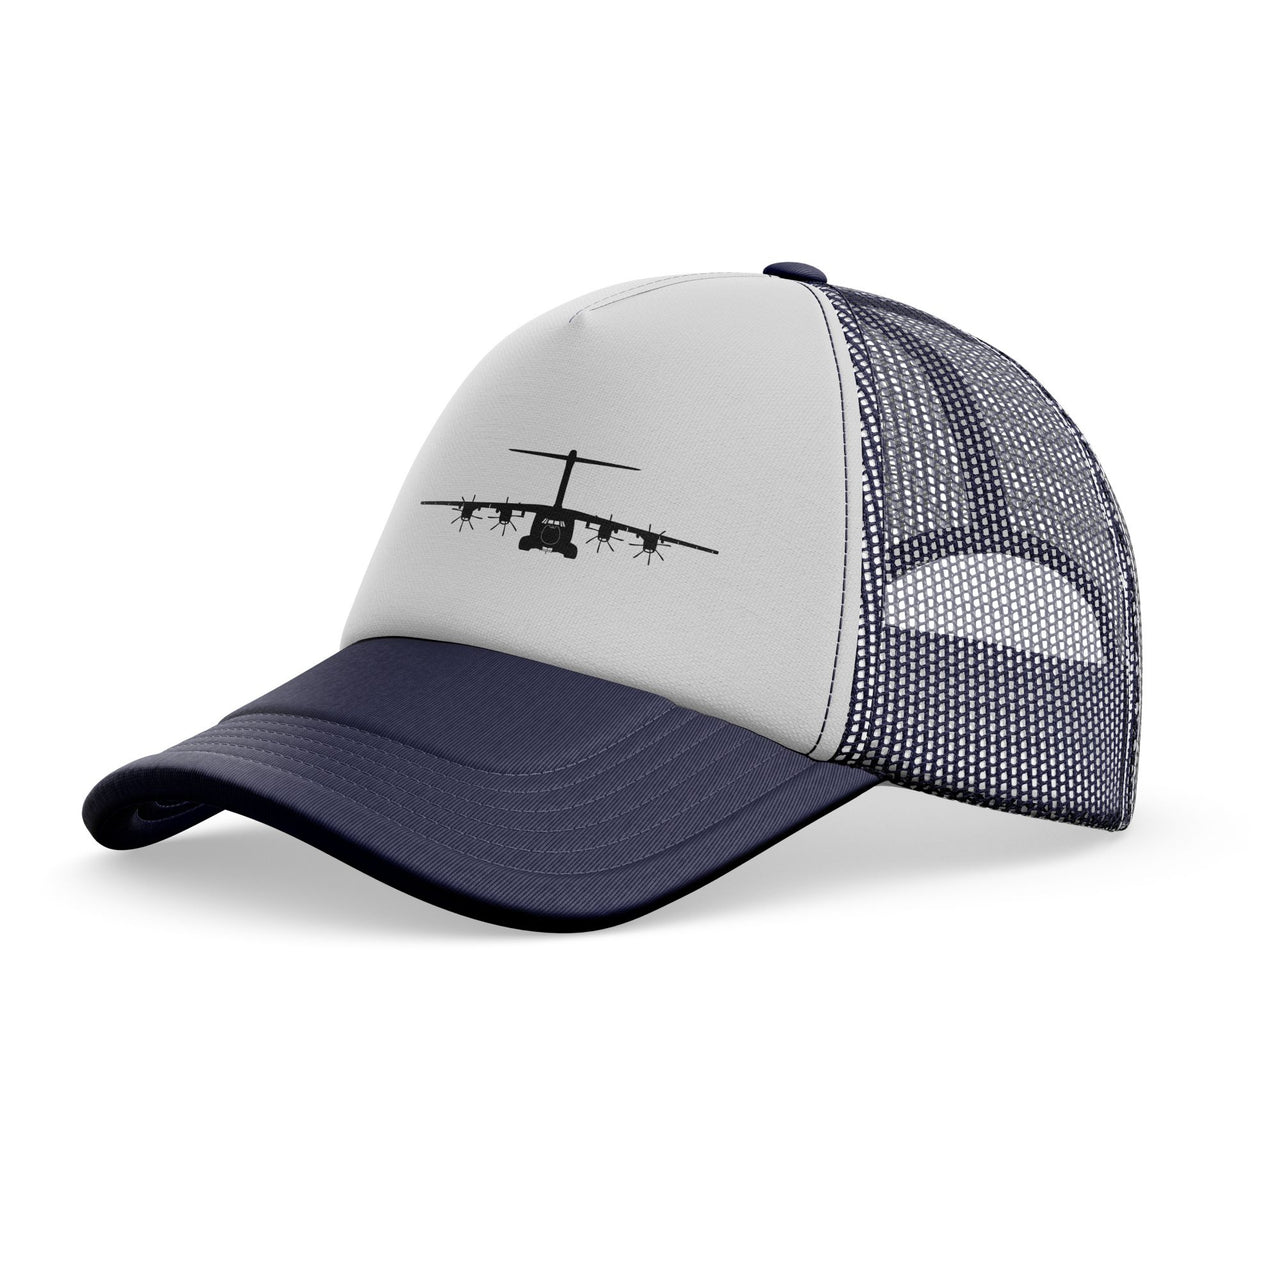 Airbus A400M Silhouette Designed Trucker Caps & Hats